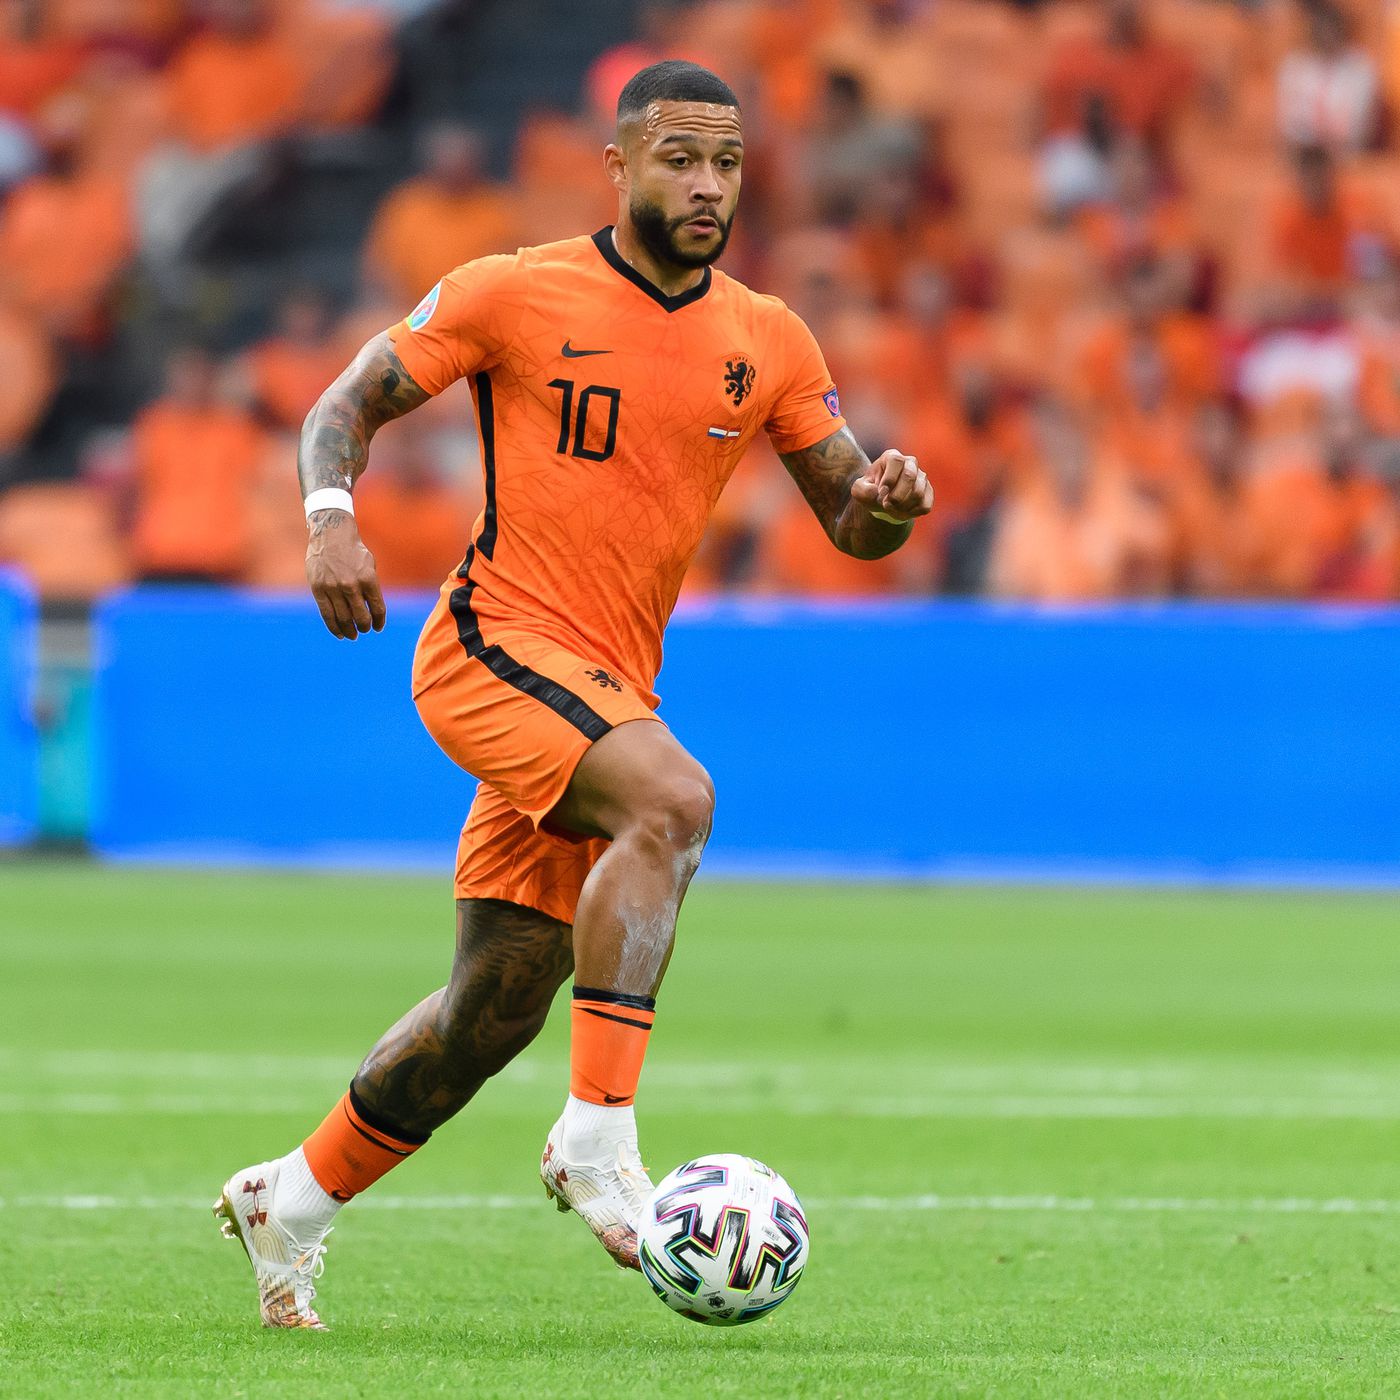 FIFA World Cup Qualifiers: Netherlands thrash Montenegro, Depay stars